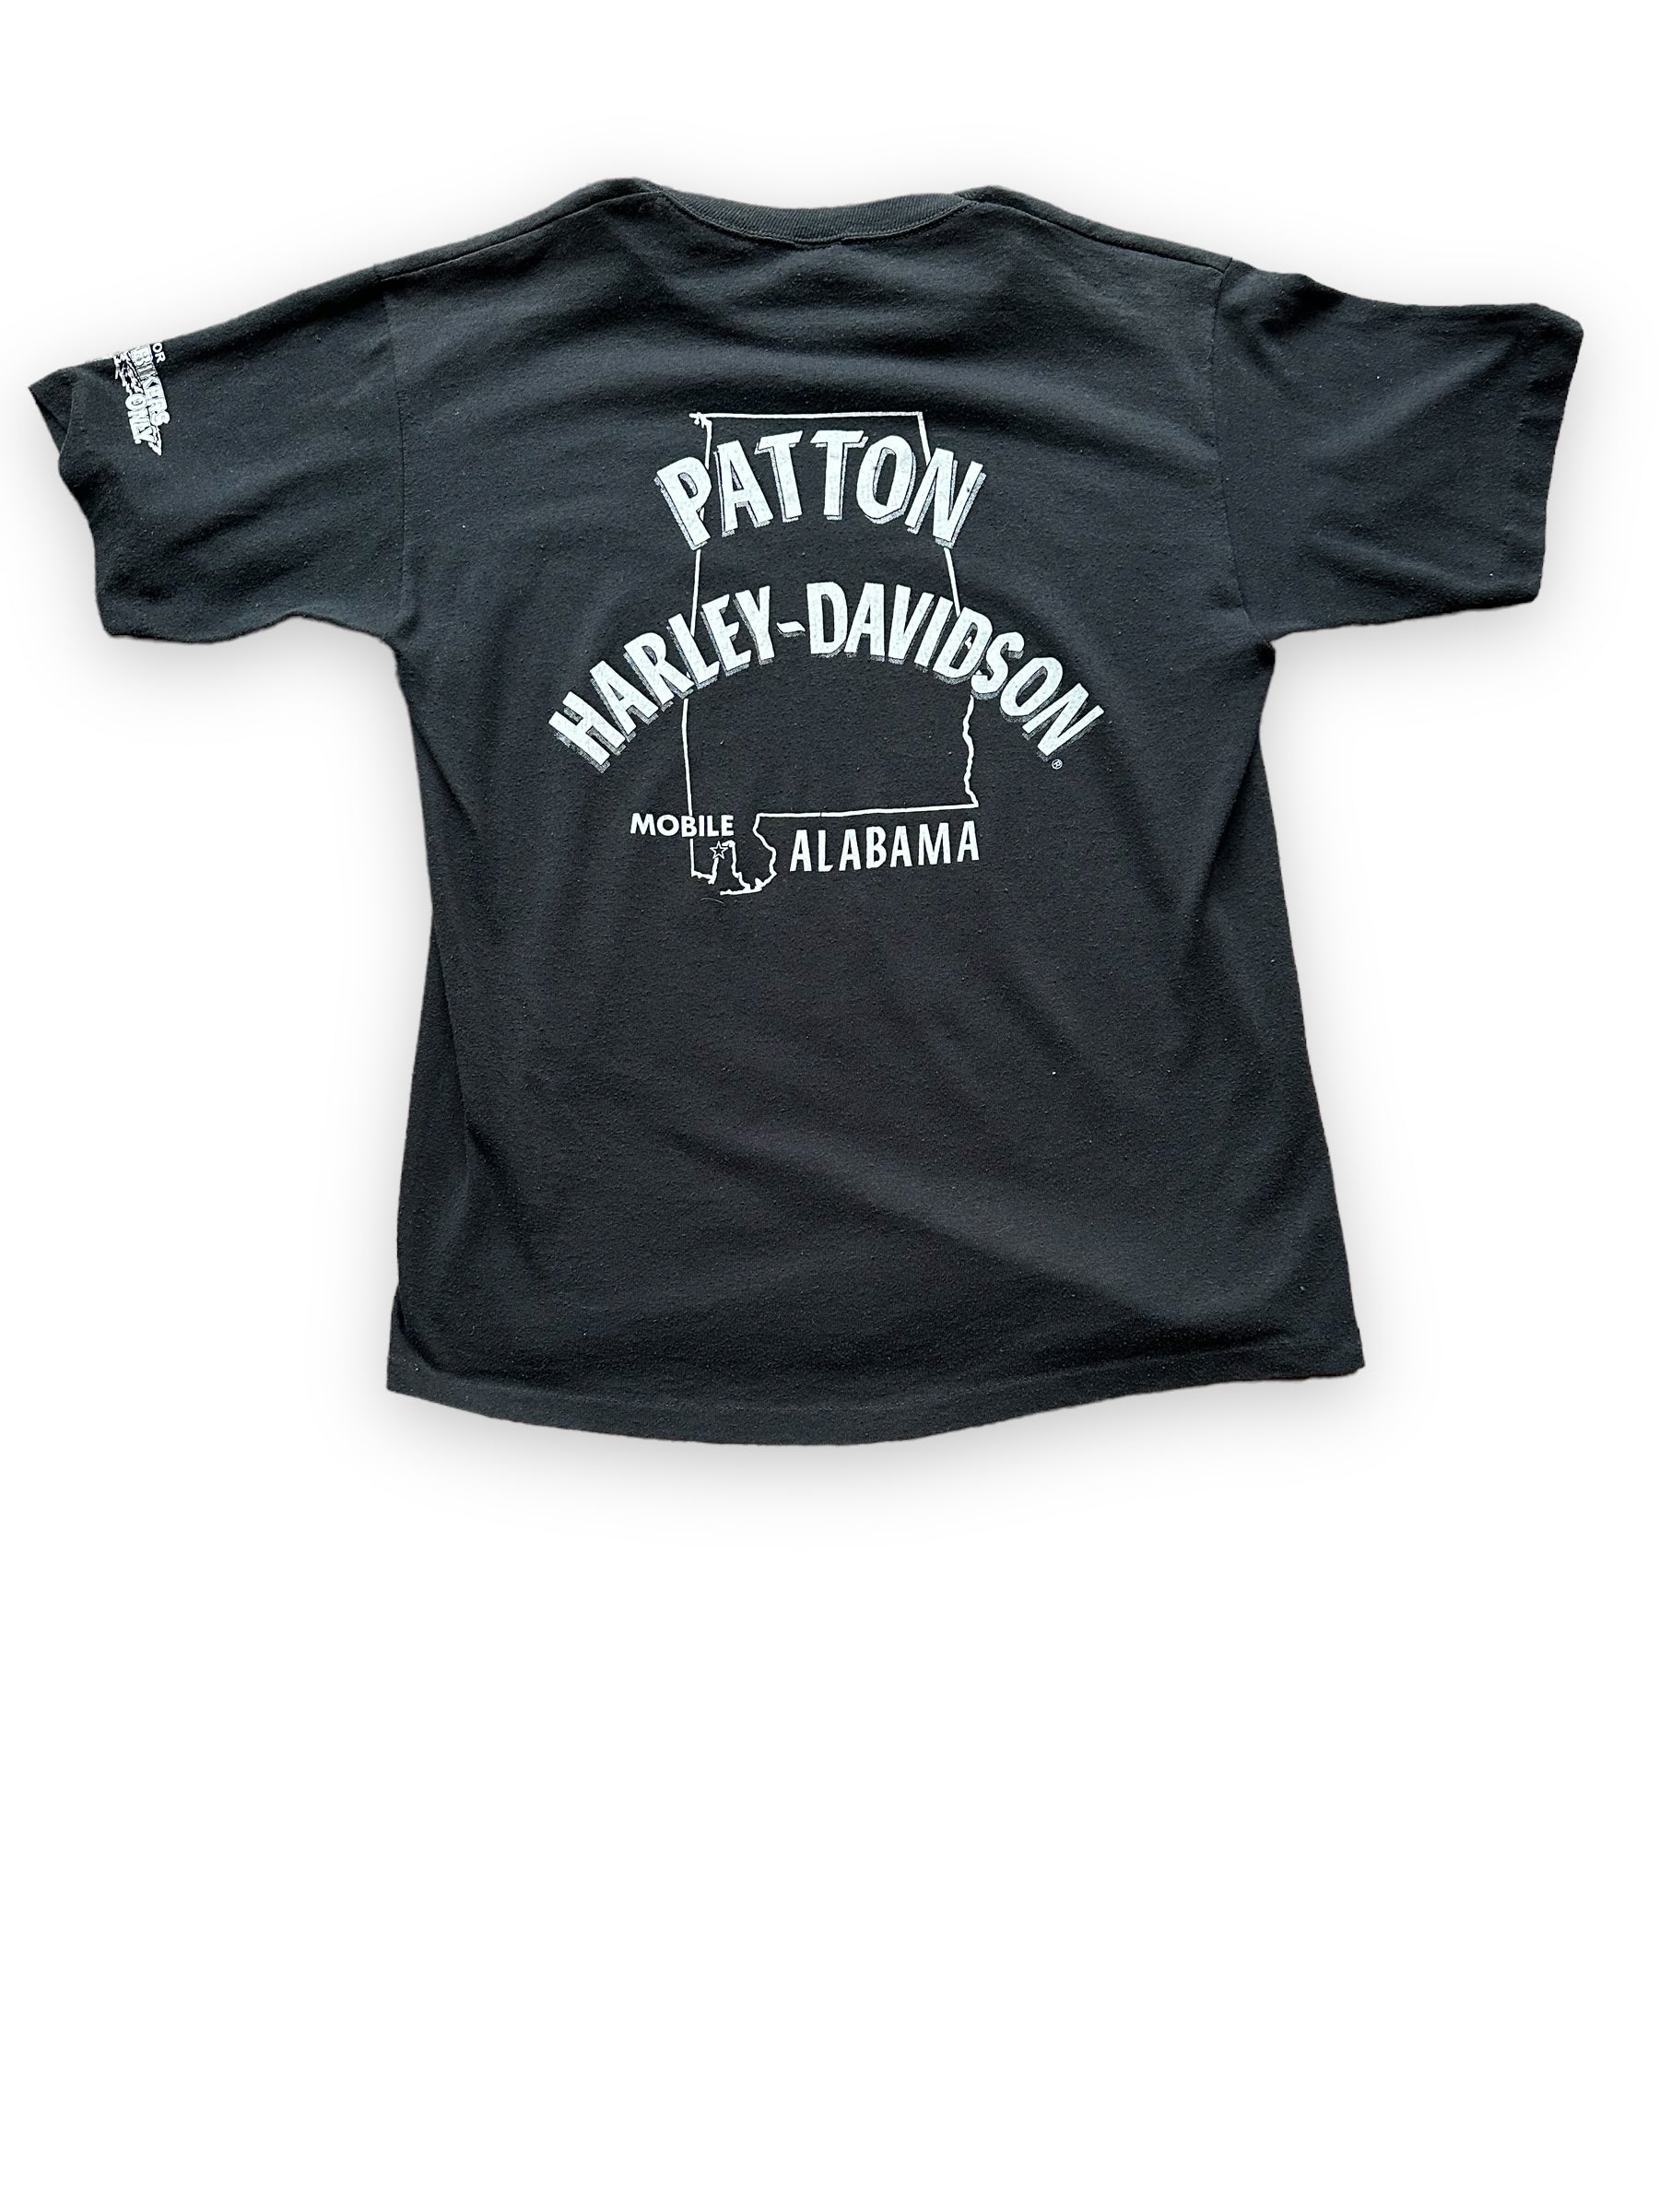 Vintage Papa Roach Concert T-Shirt Black XL Topic  Concert tshirts, Harley  davidson t shirts, Weird shirts